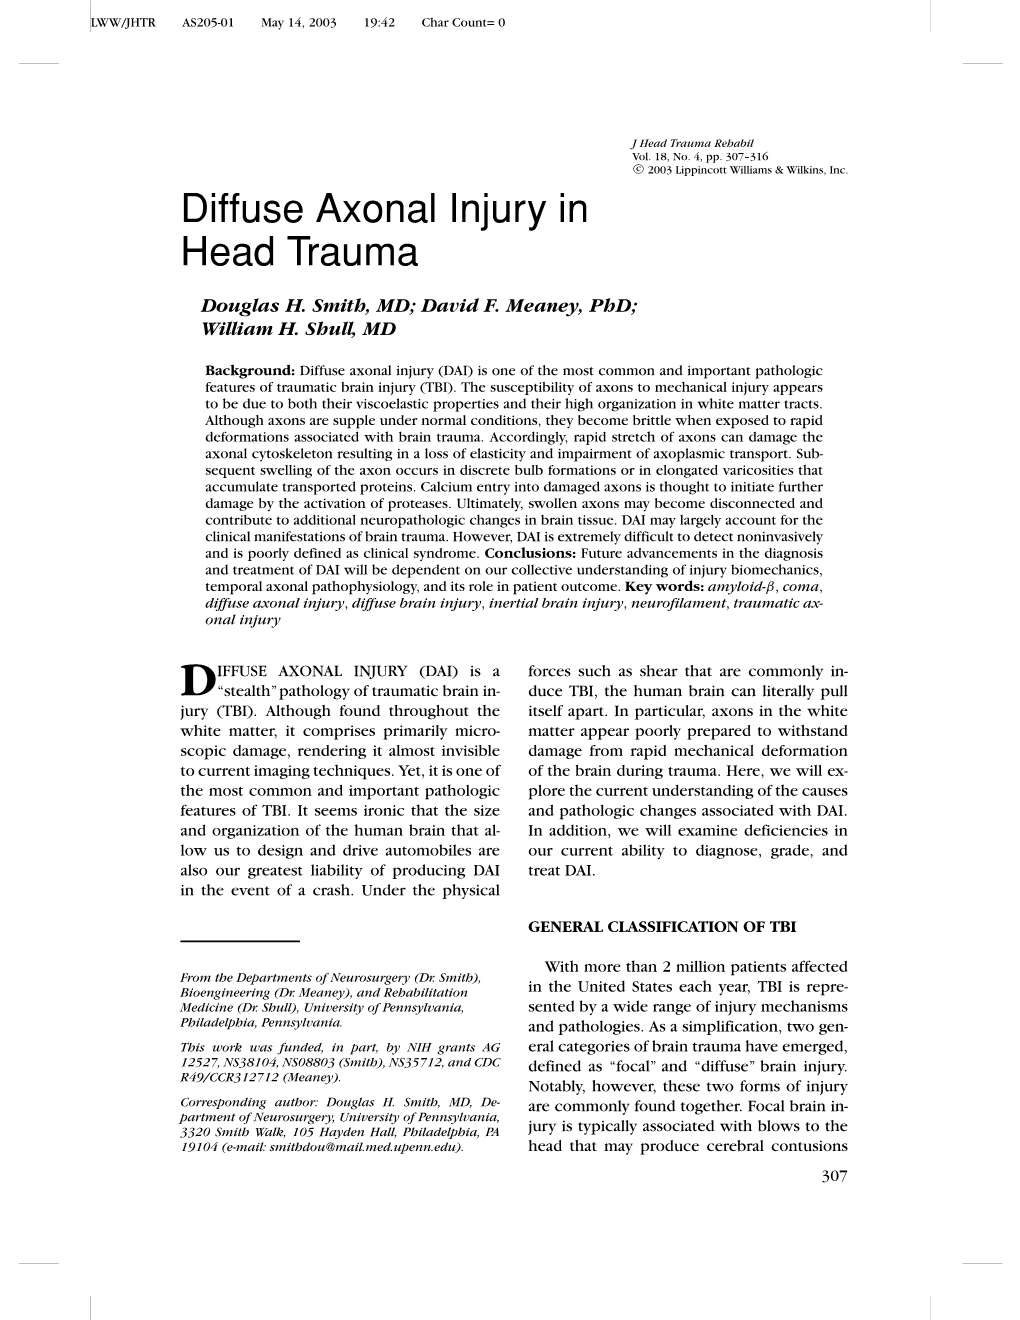 Diffuse Axonal Injury in Head Trauma